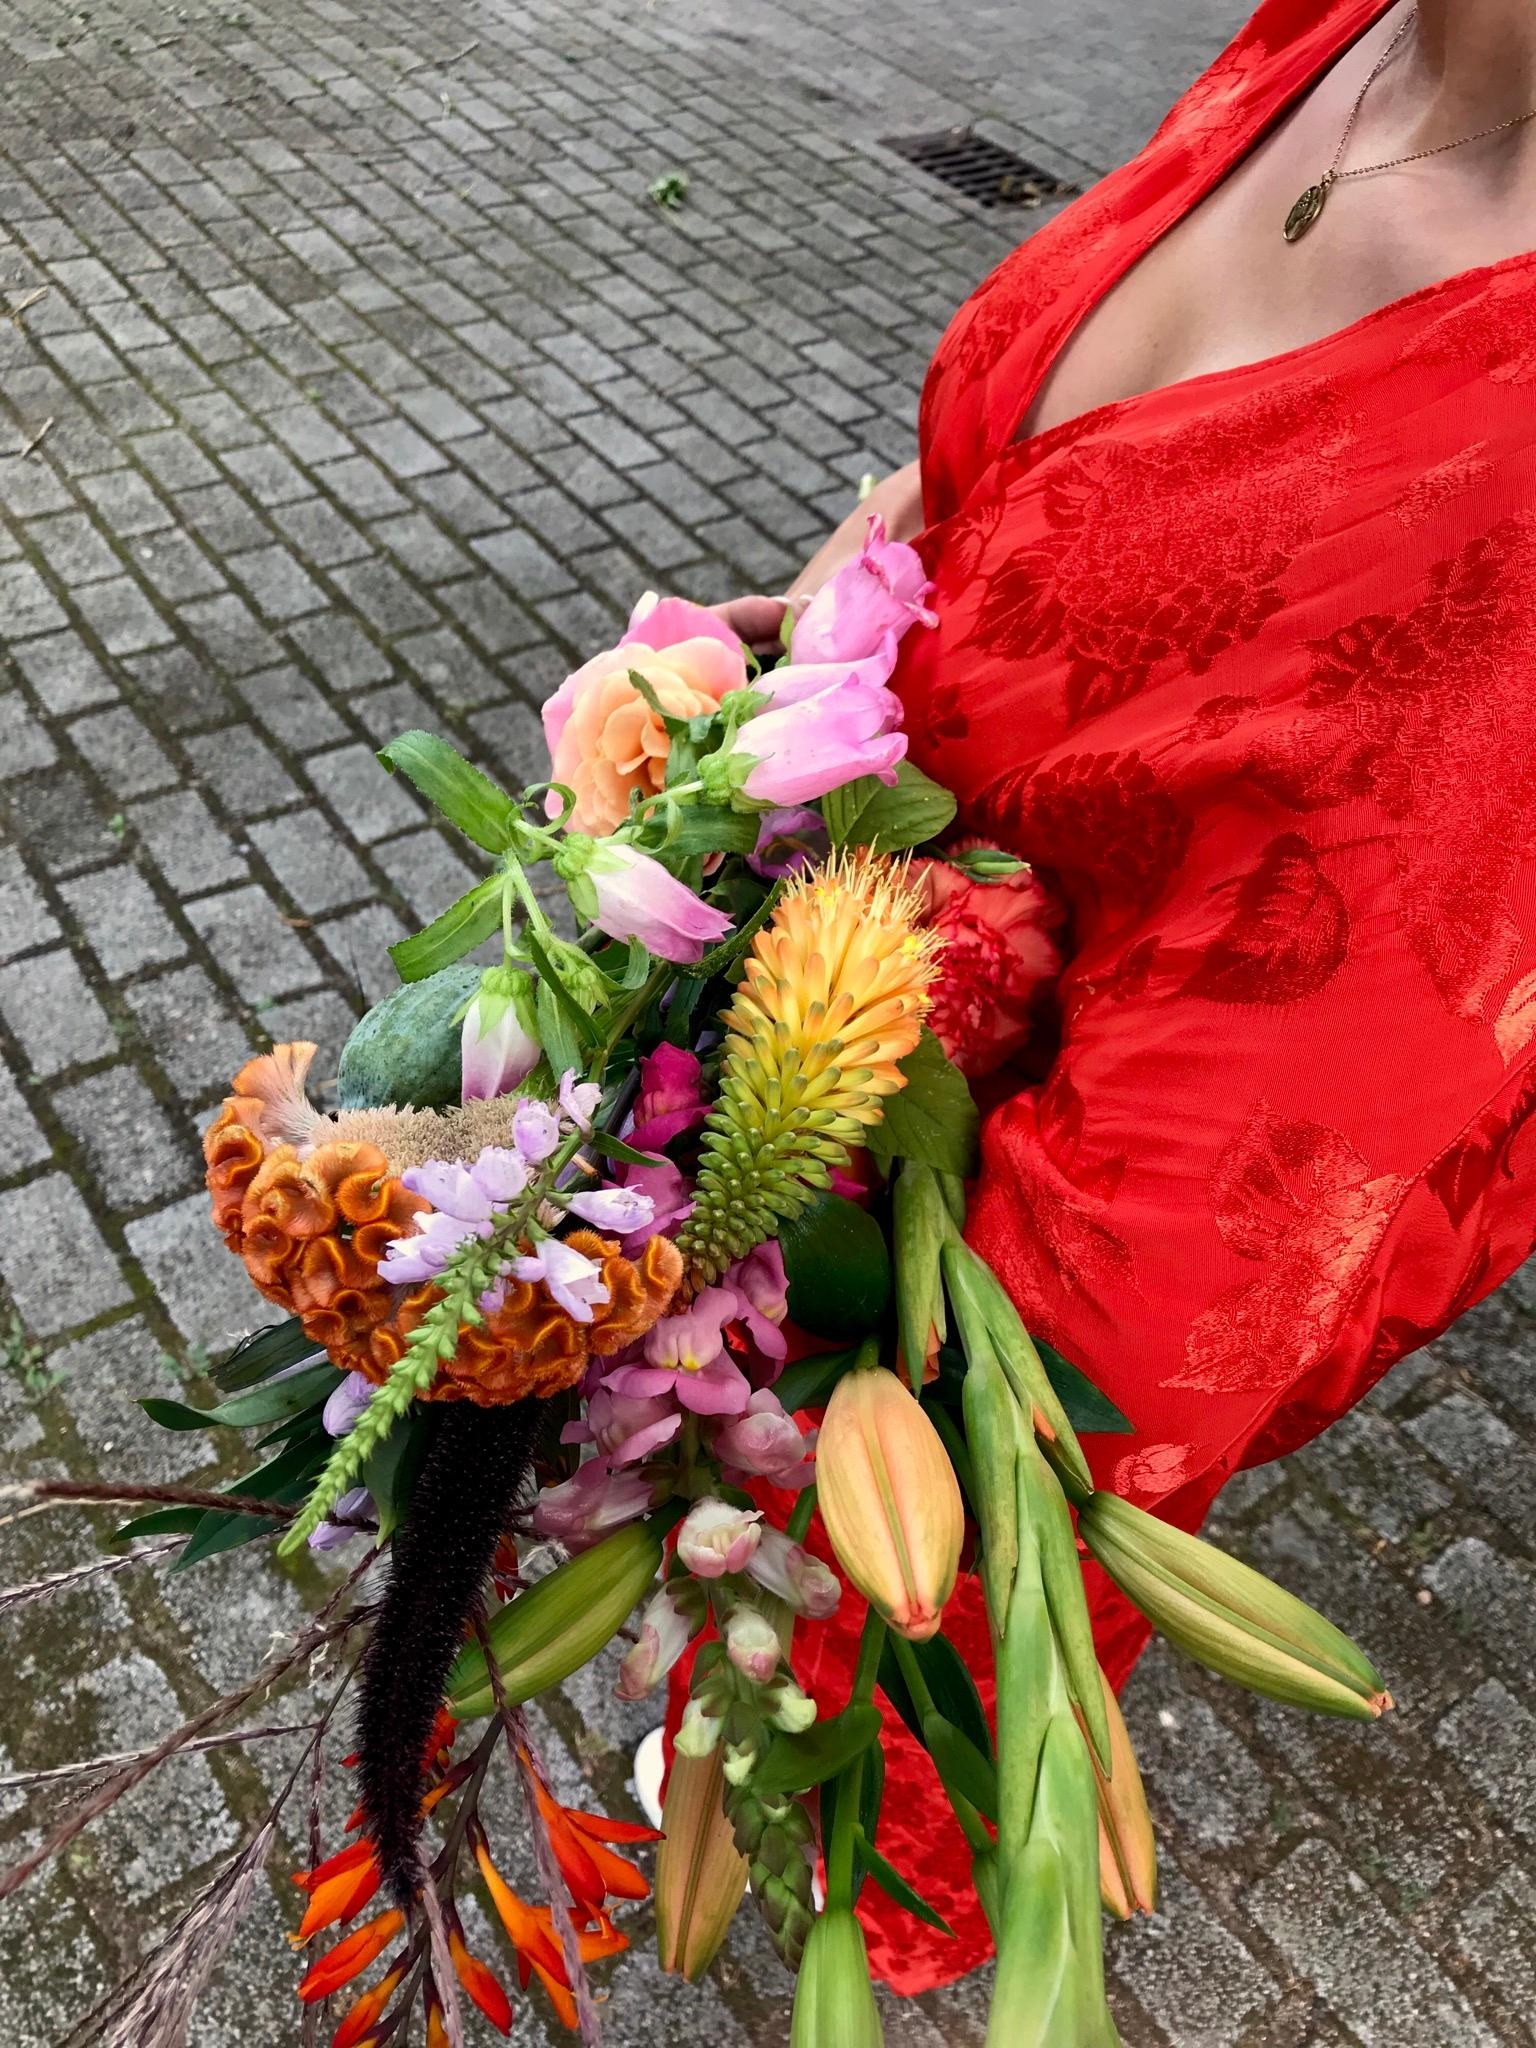 Zara Kleid Rot Blumen
 seattle 2021